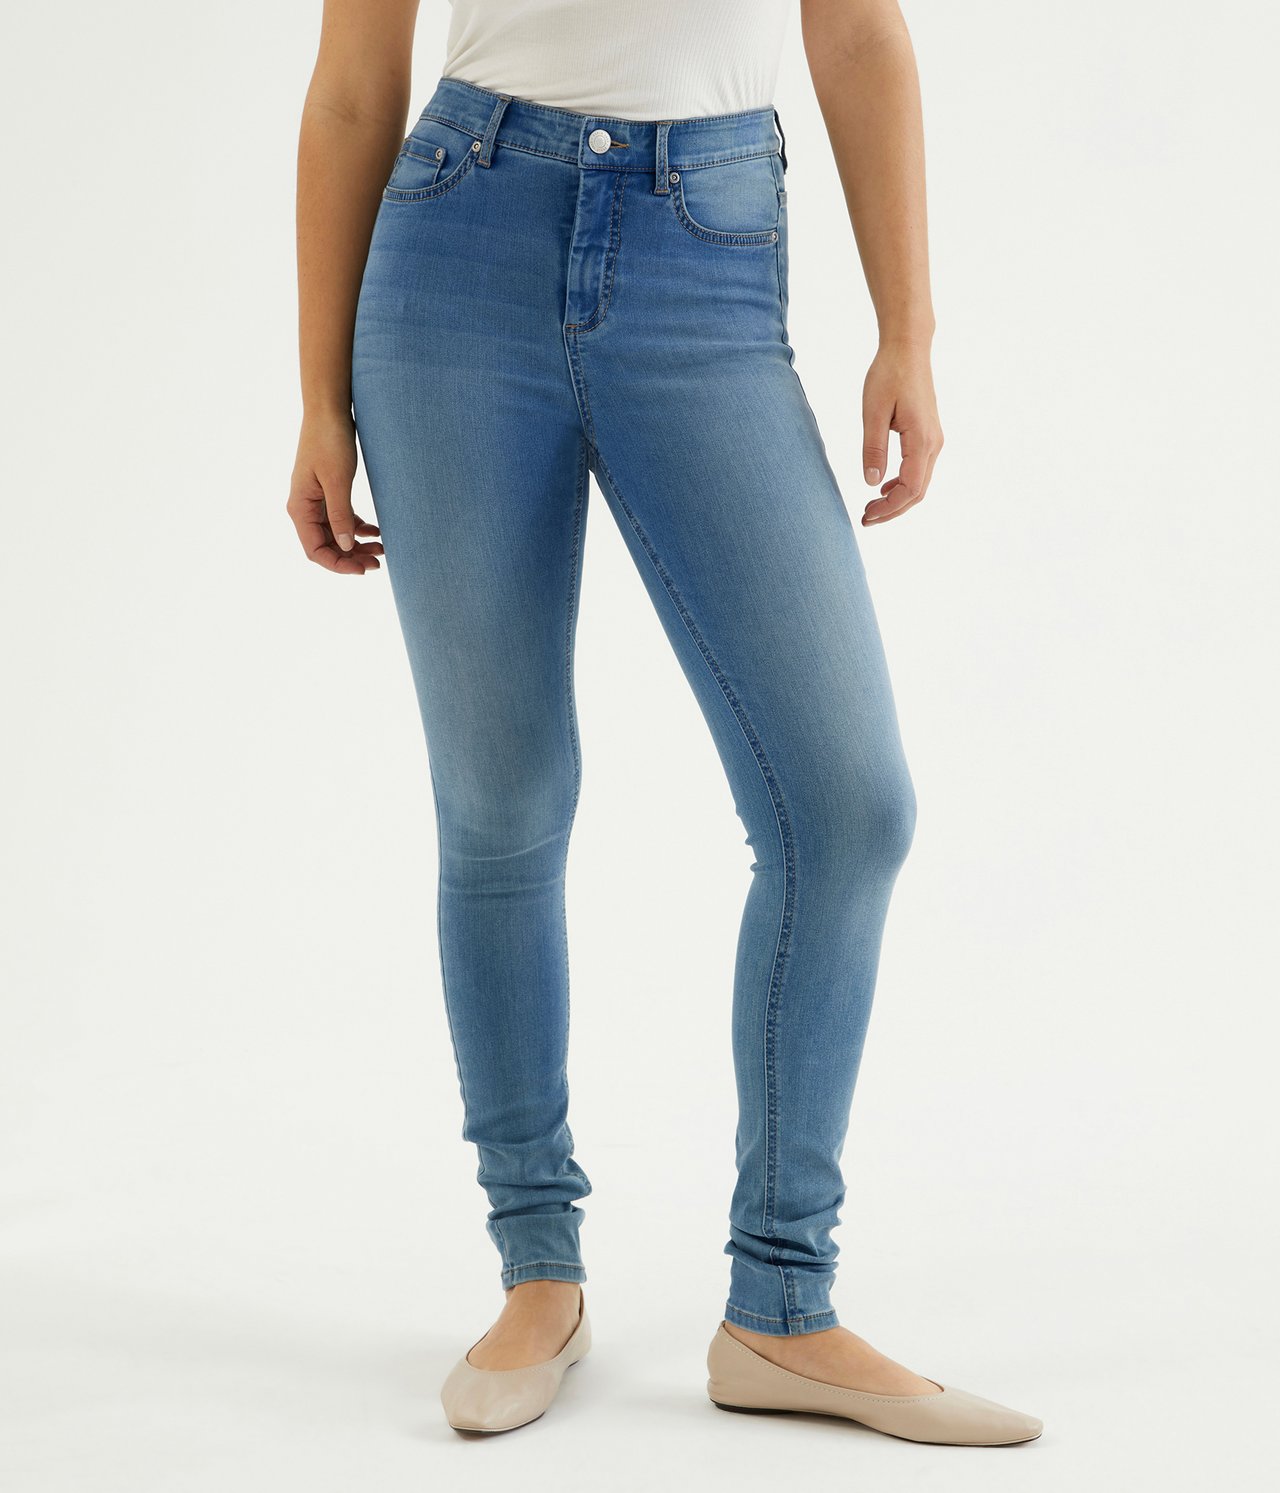 Super slim jeans extra long leg - Denim - 3